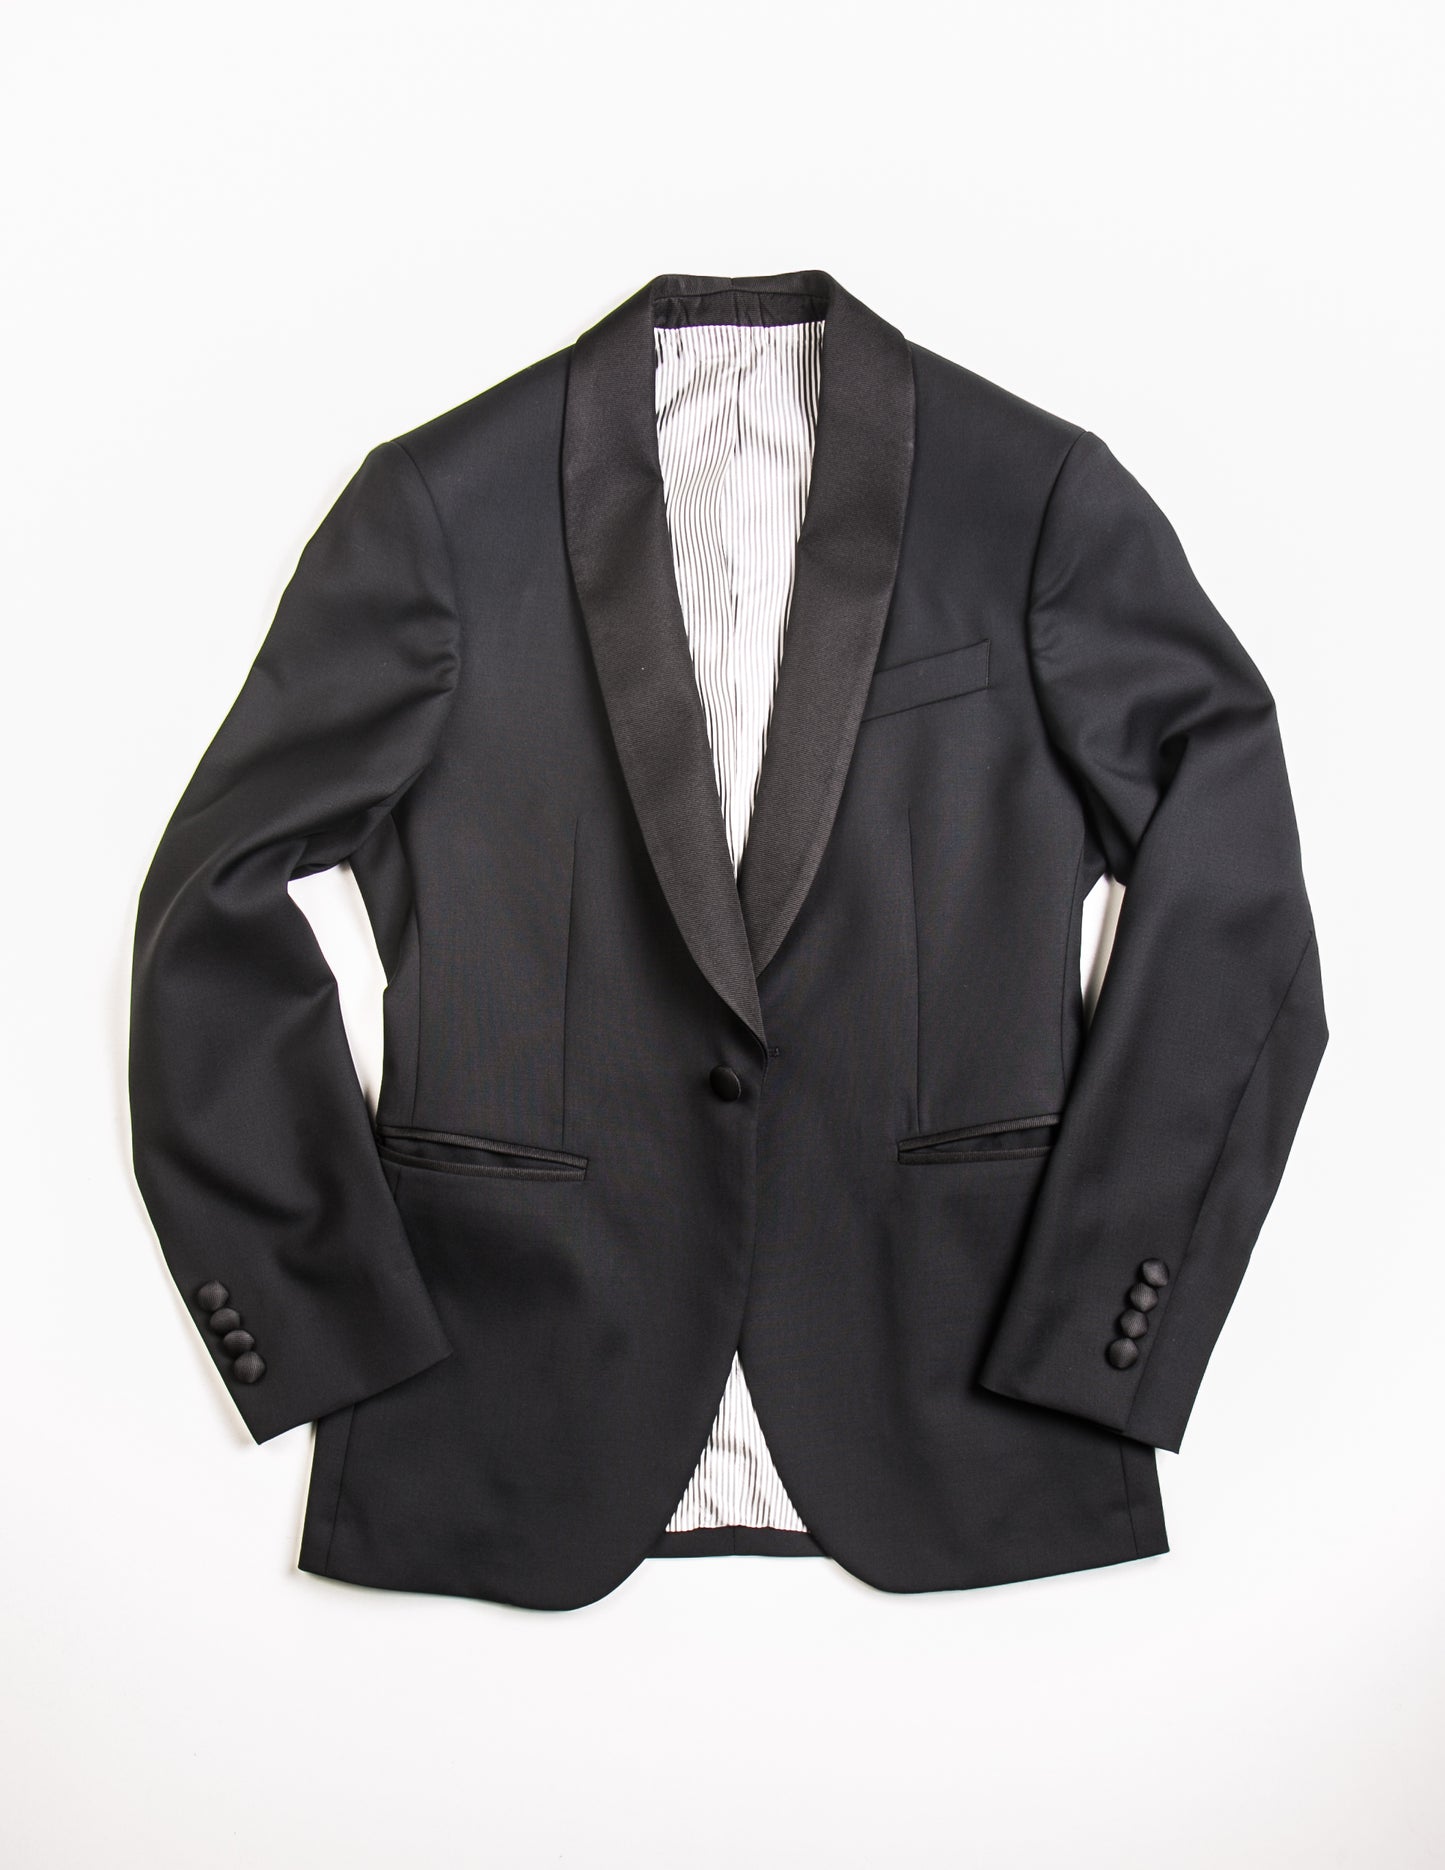 BKT50 Shawl Collar Tuxedo Jacket in Super 110s - Black with Grosgrain Lapel